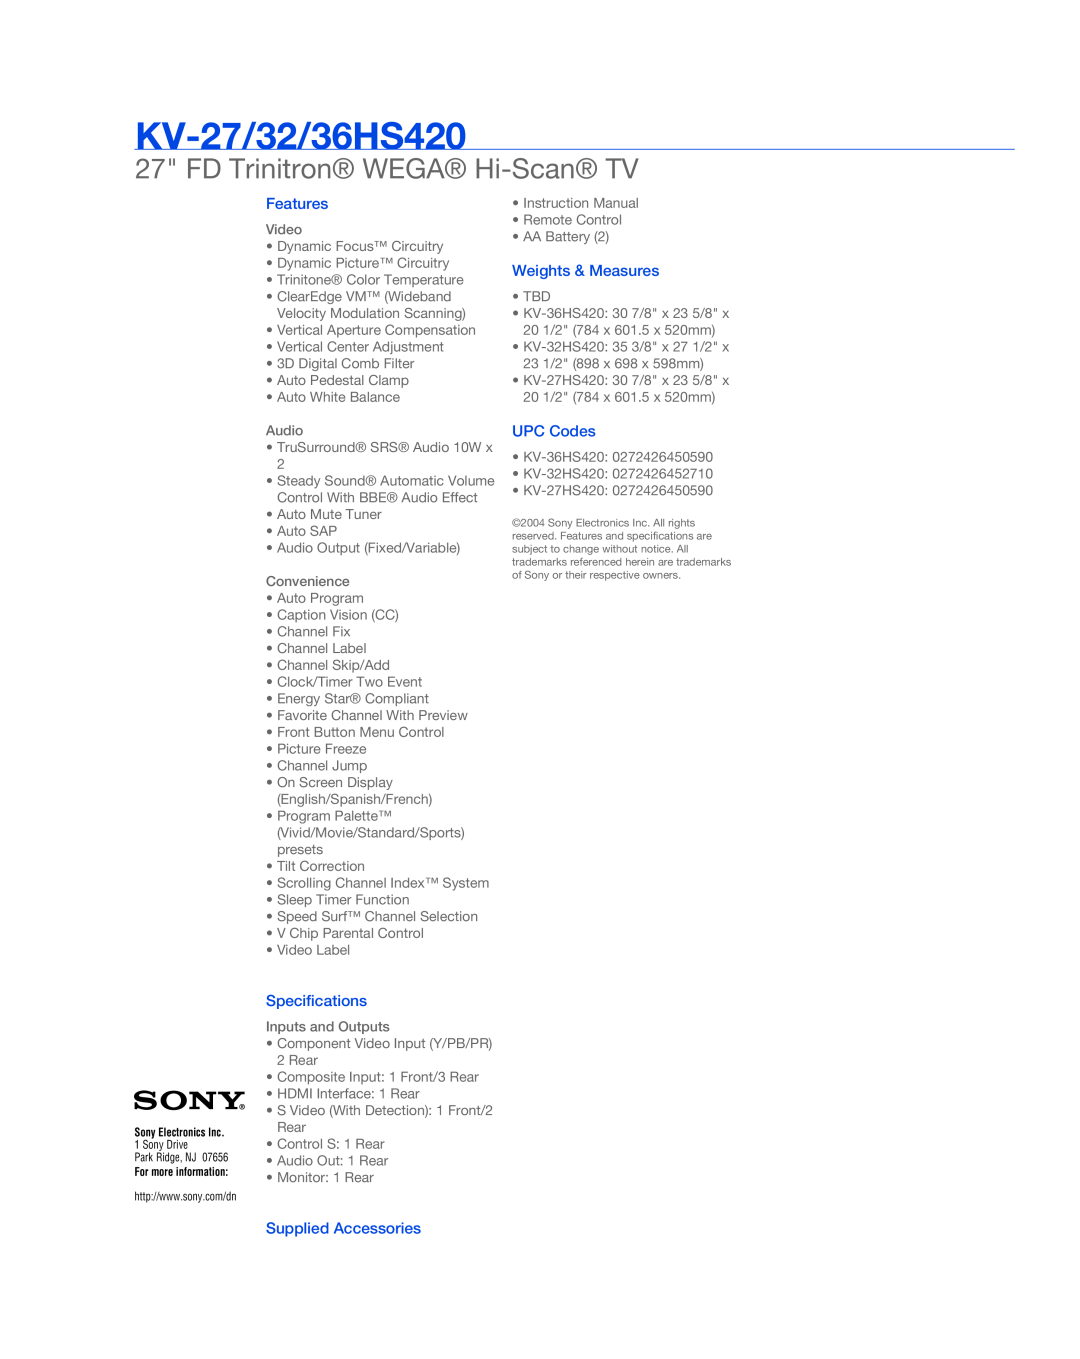 Sony KV-32 manual KV-27/32/36HS420, FD Trinitron WEGA Hi-Scan TV, Features, Specifications, Weights & Measures, UPC Codes 